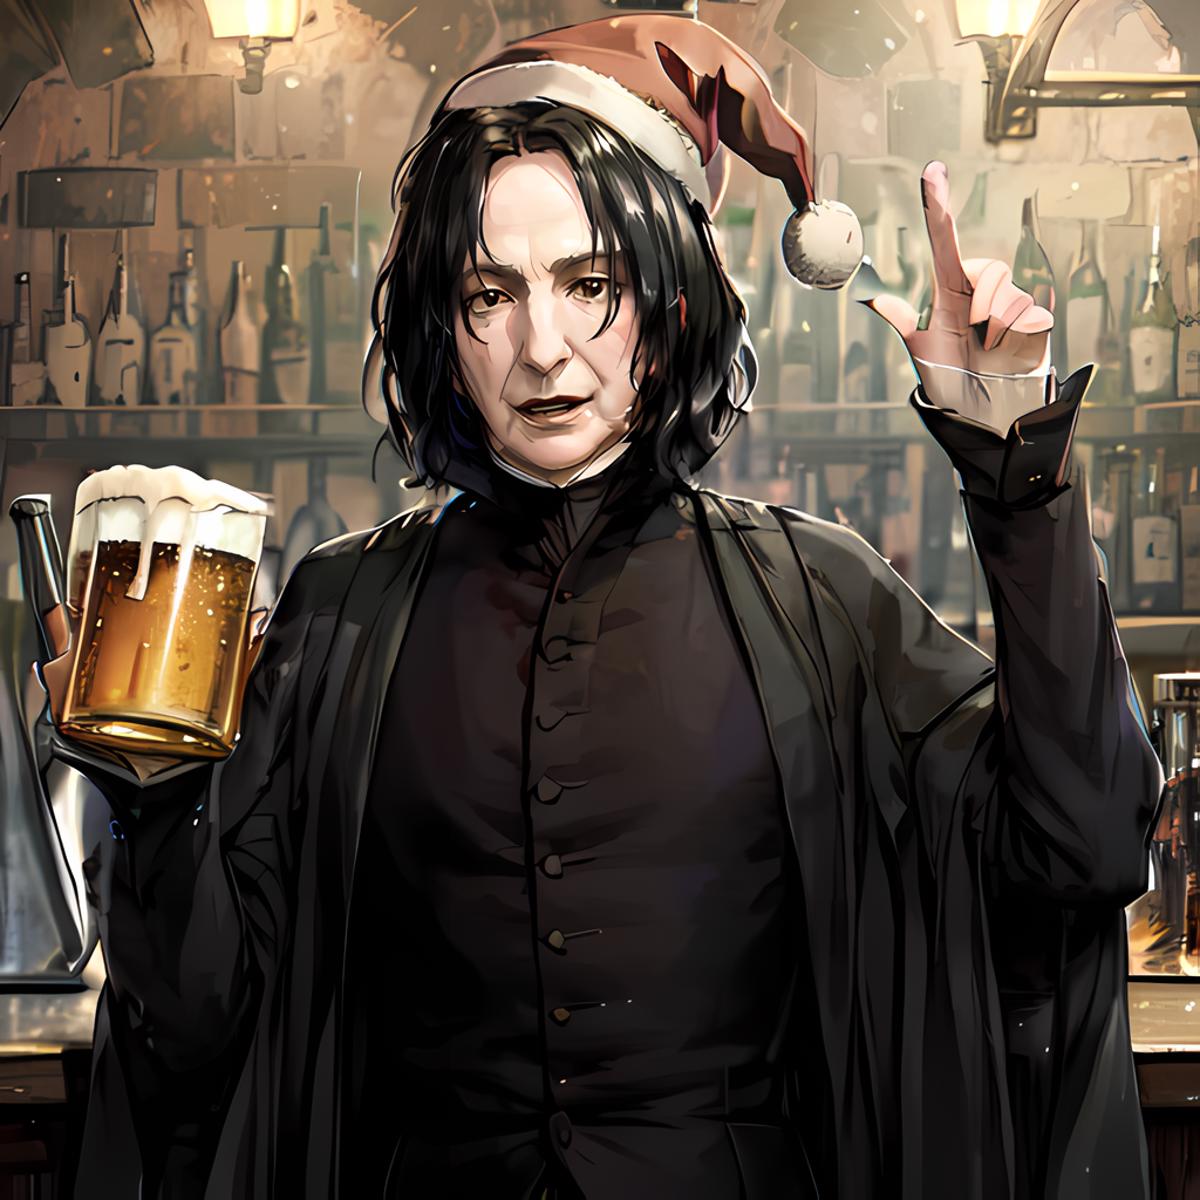 Severus Snape image by White_Yu